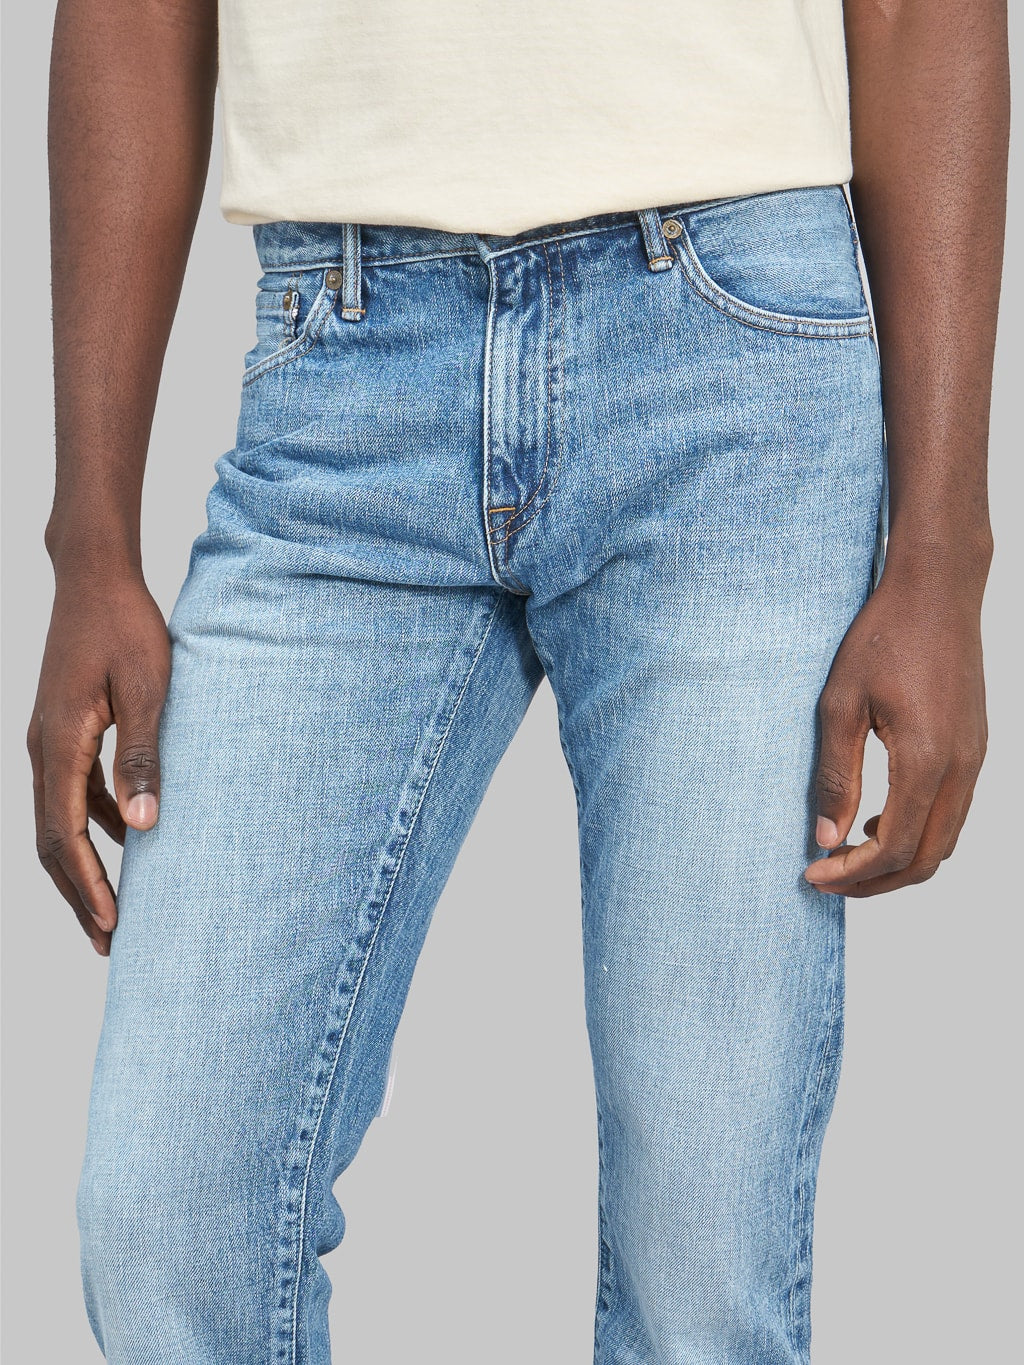 Japan Blue J304 Africa cotton Stonewashed Straight Jeans waist